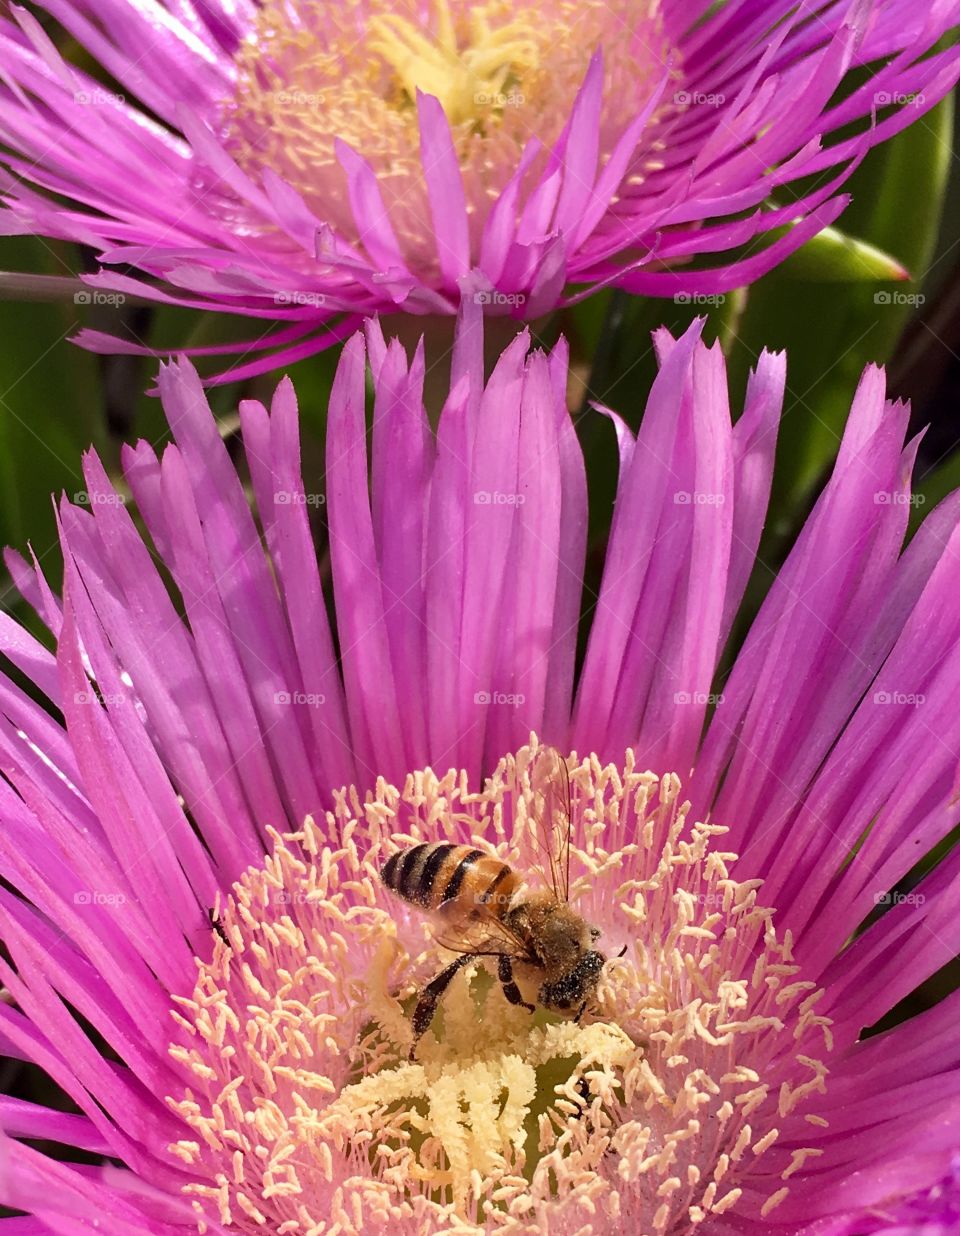 Bee working hard